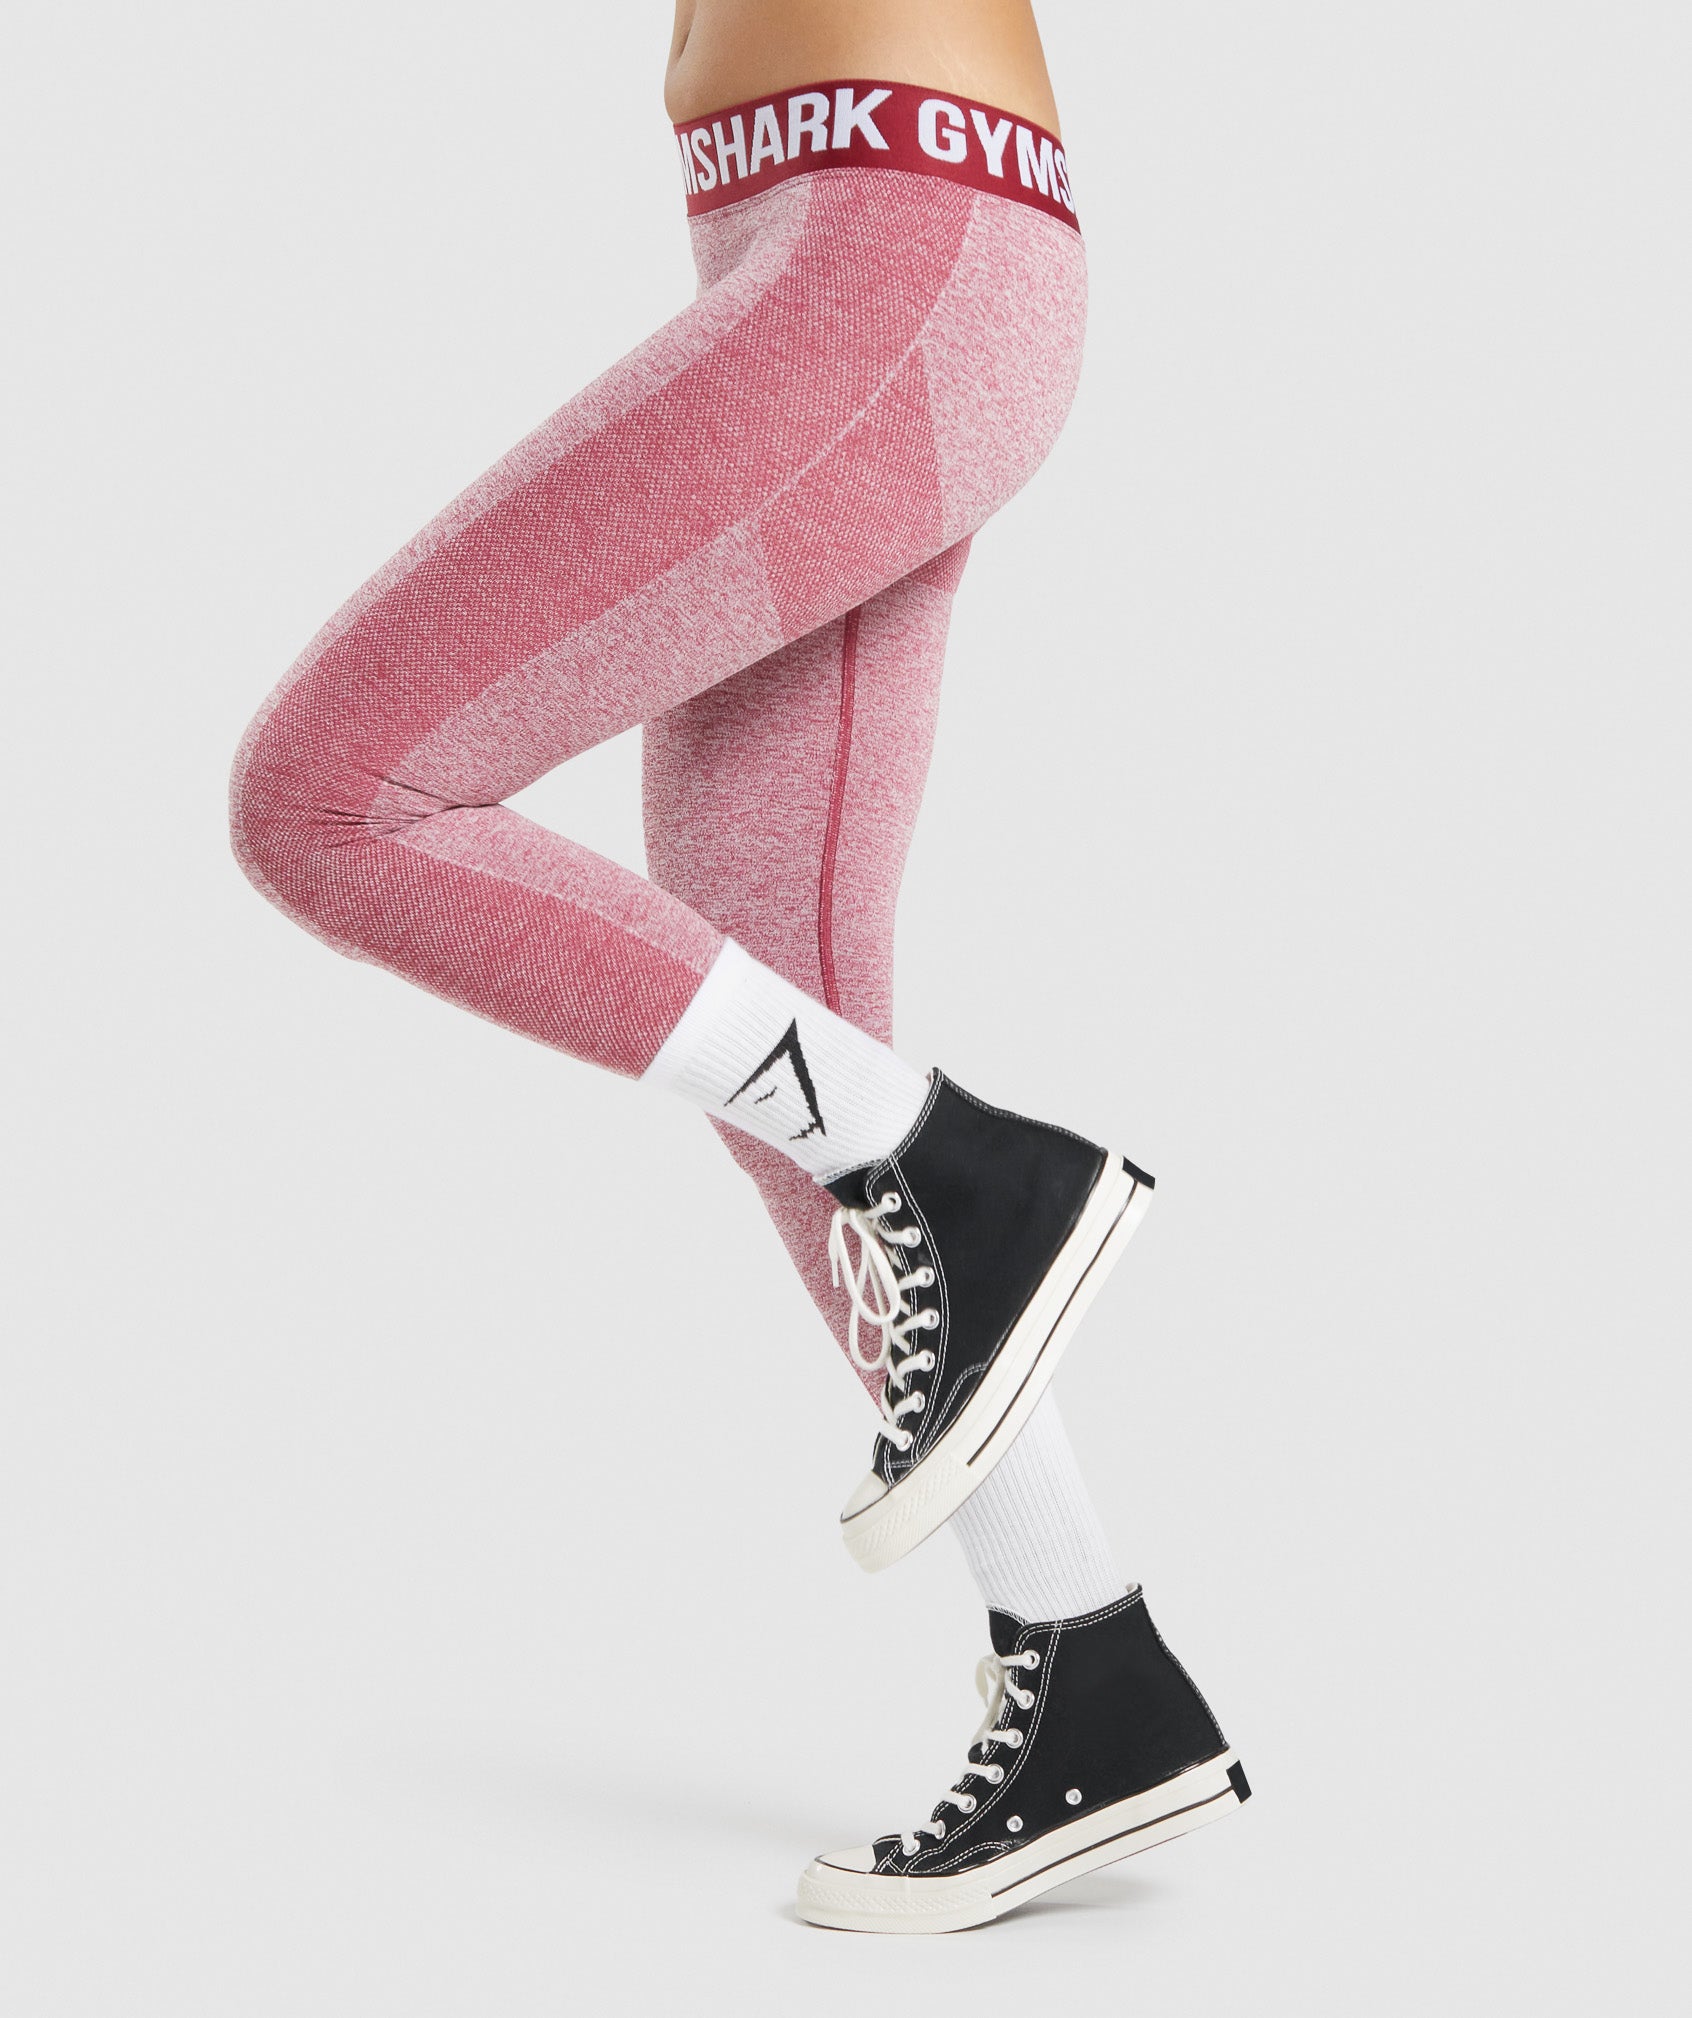 Gymshark pink leggings size Xs / 6-8 Practically - Depop